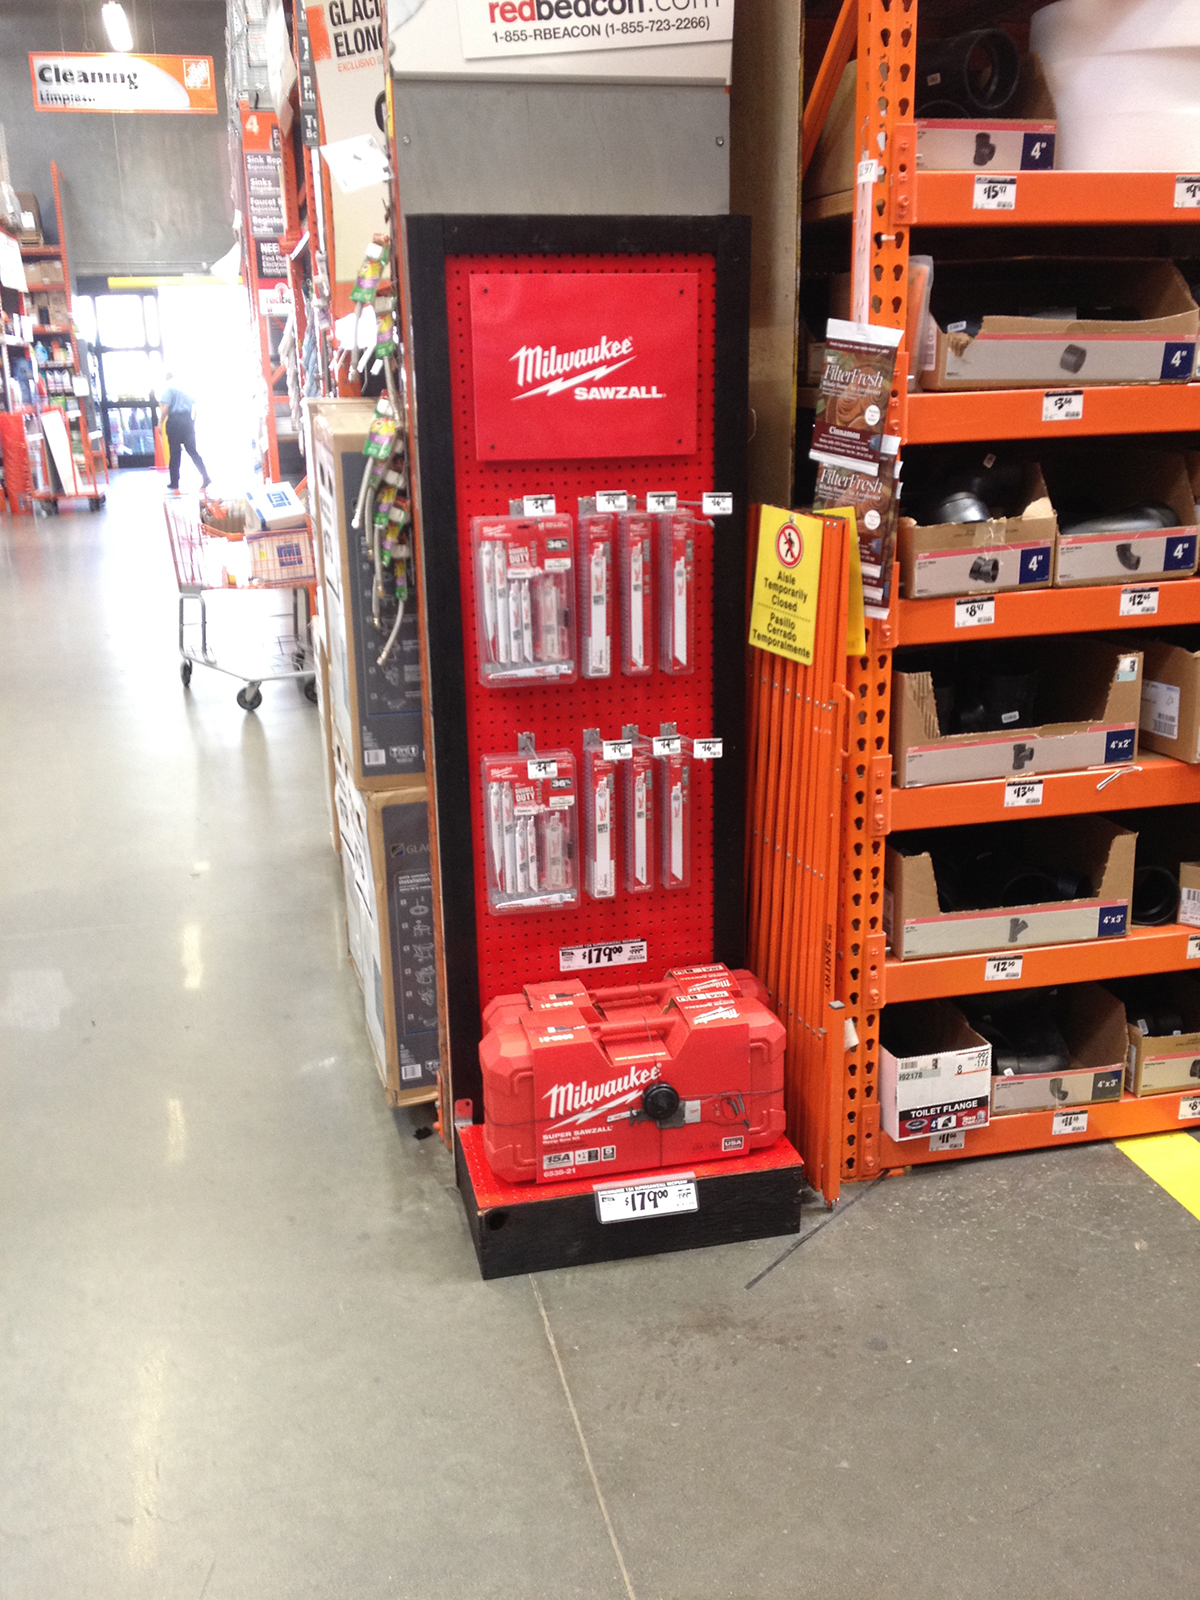 Milwaukee power tools Home Depot Hardware Stores Displays off shelf merchandising